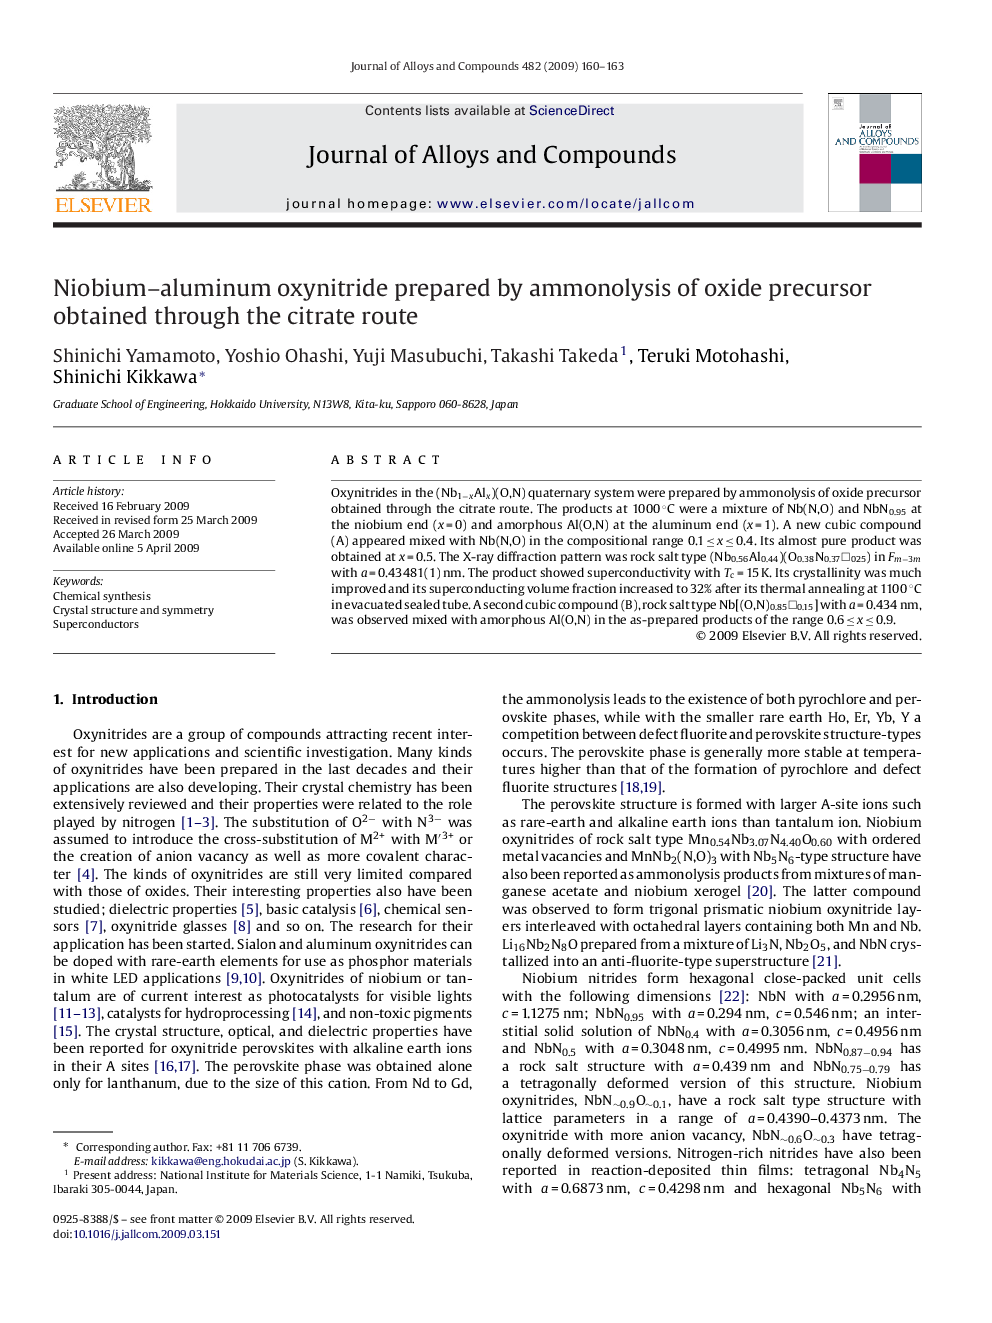 Niobium–aluminum oxynitride prepared by ammonolysis of oxide precursor obtained through the citrate route